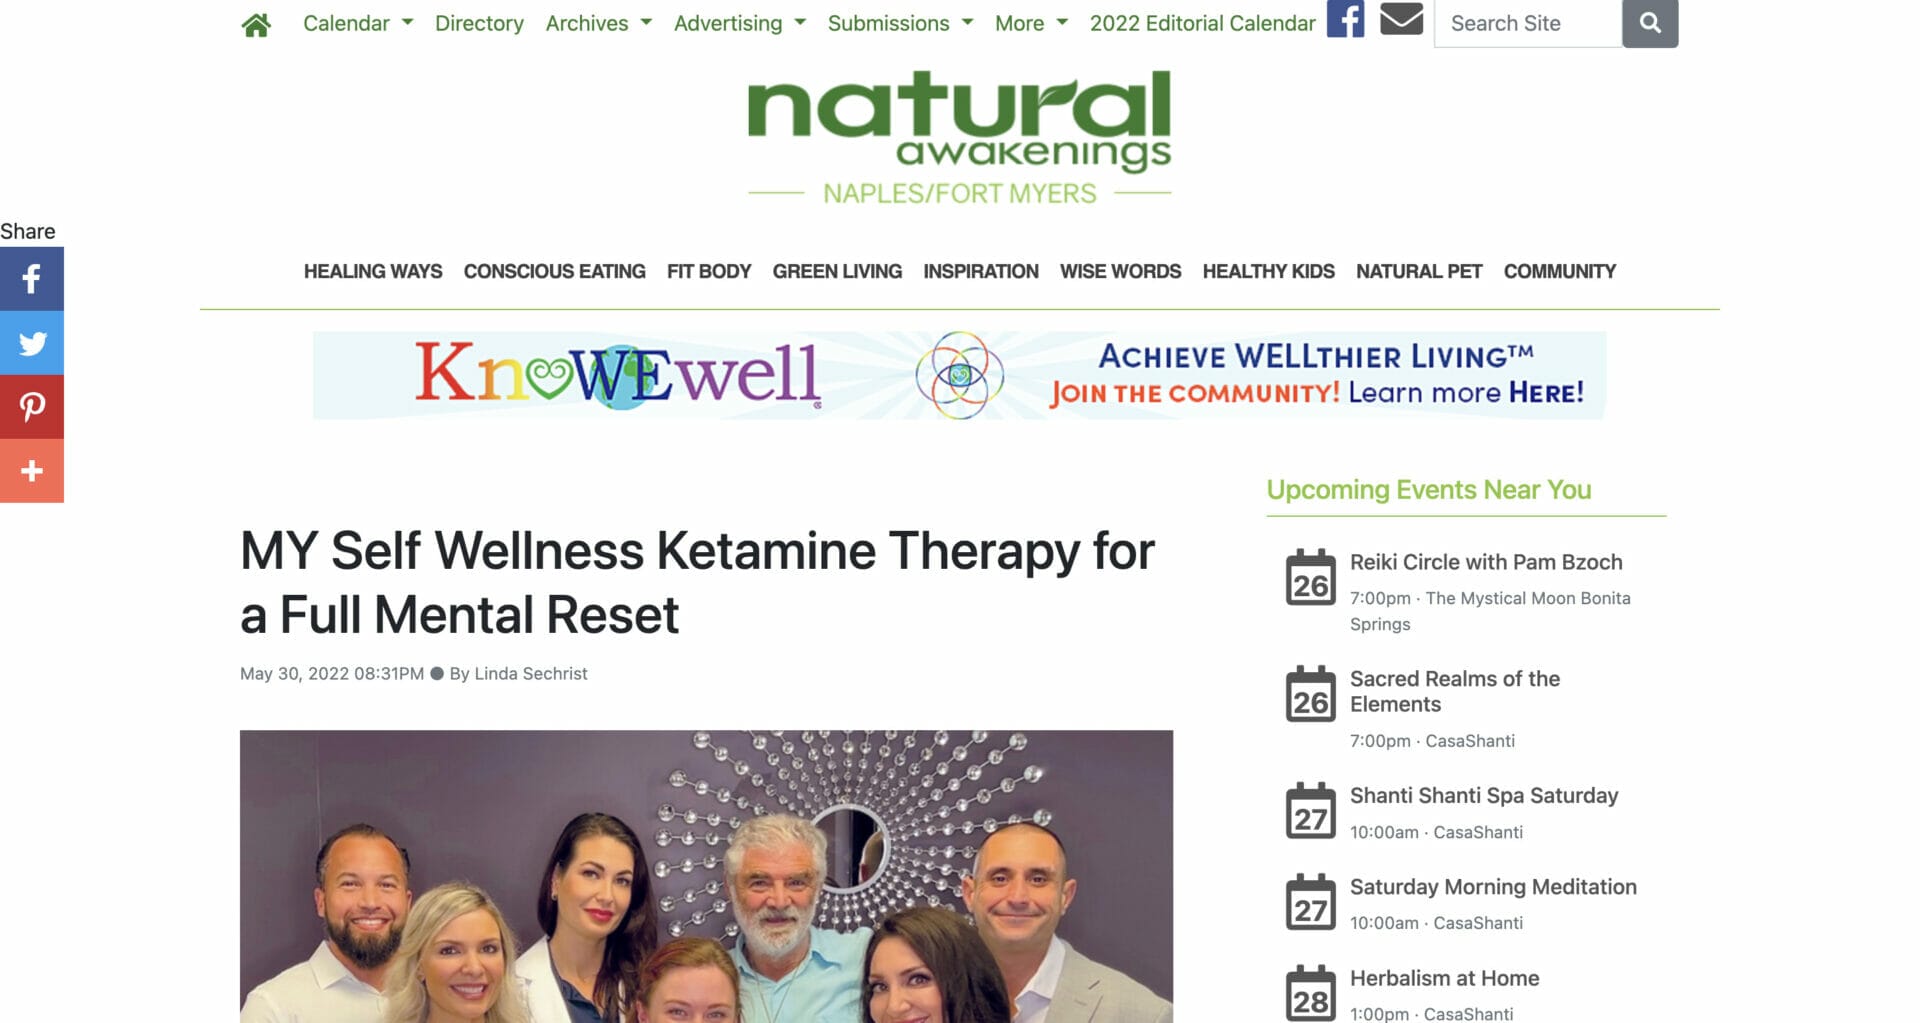 MY Self Wellness, Ketamine Therapy Full Mental Reset